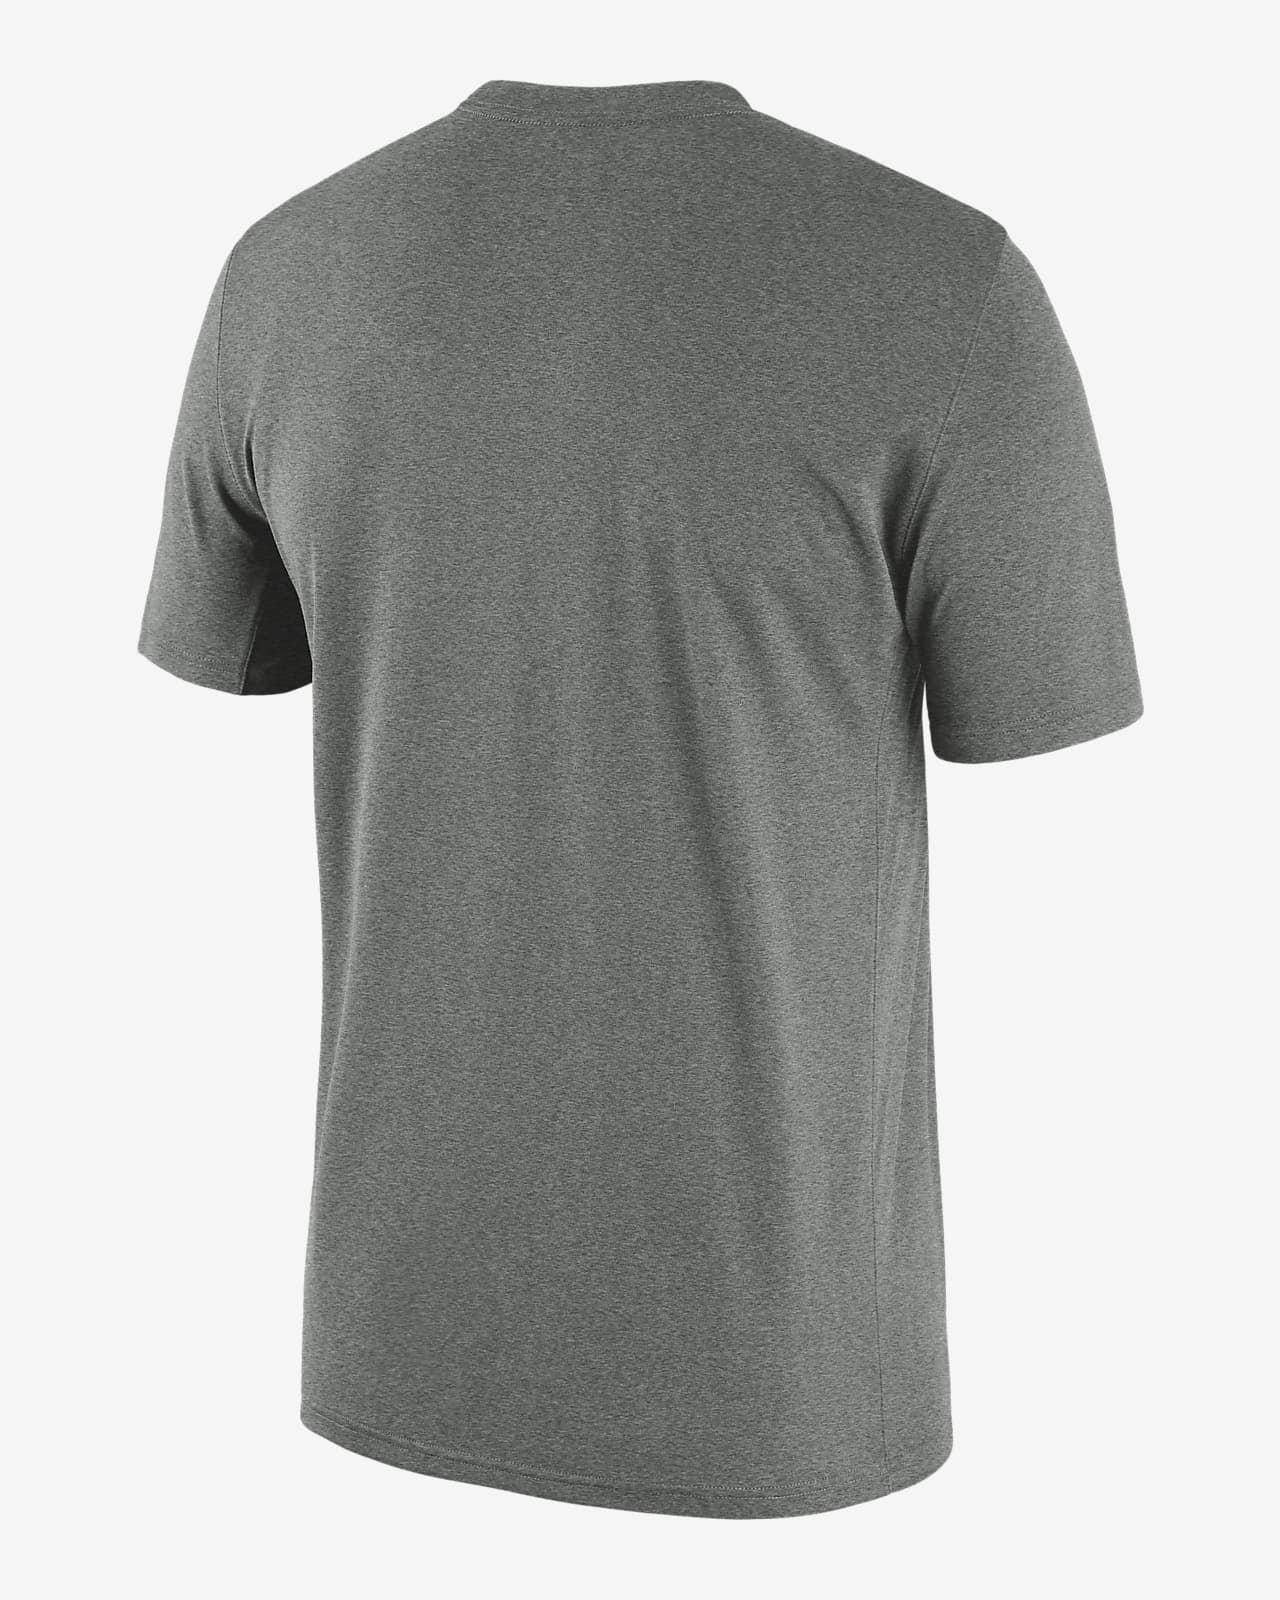 Nike Men's Los Angeles Lakers Grey Practice T-Shirt, Medium, Gray